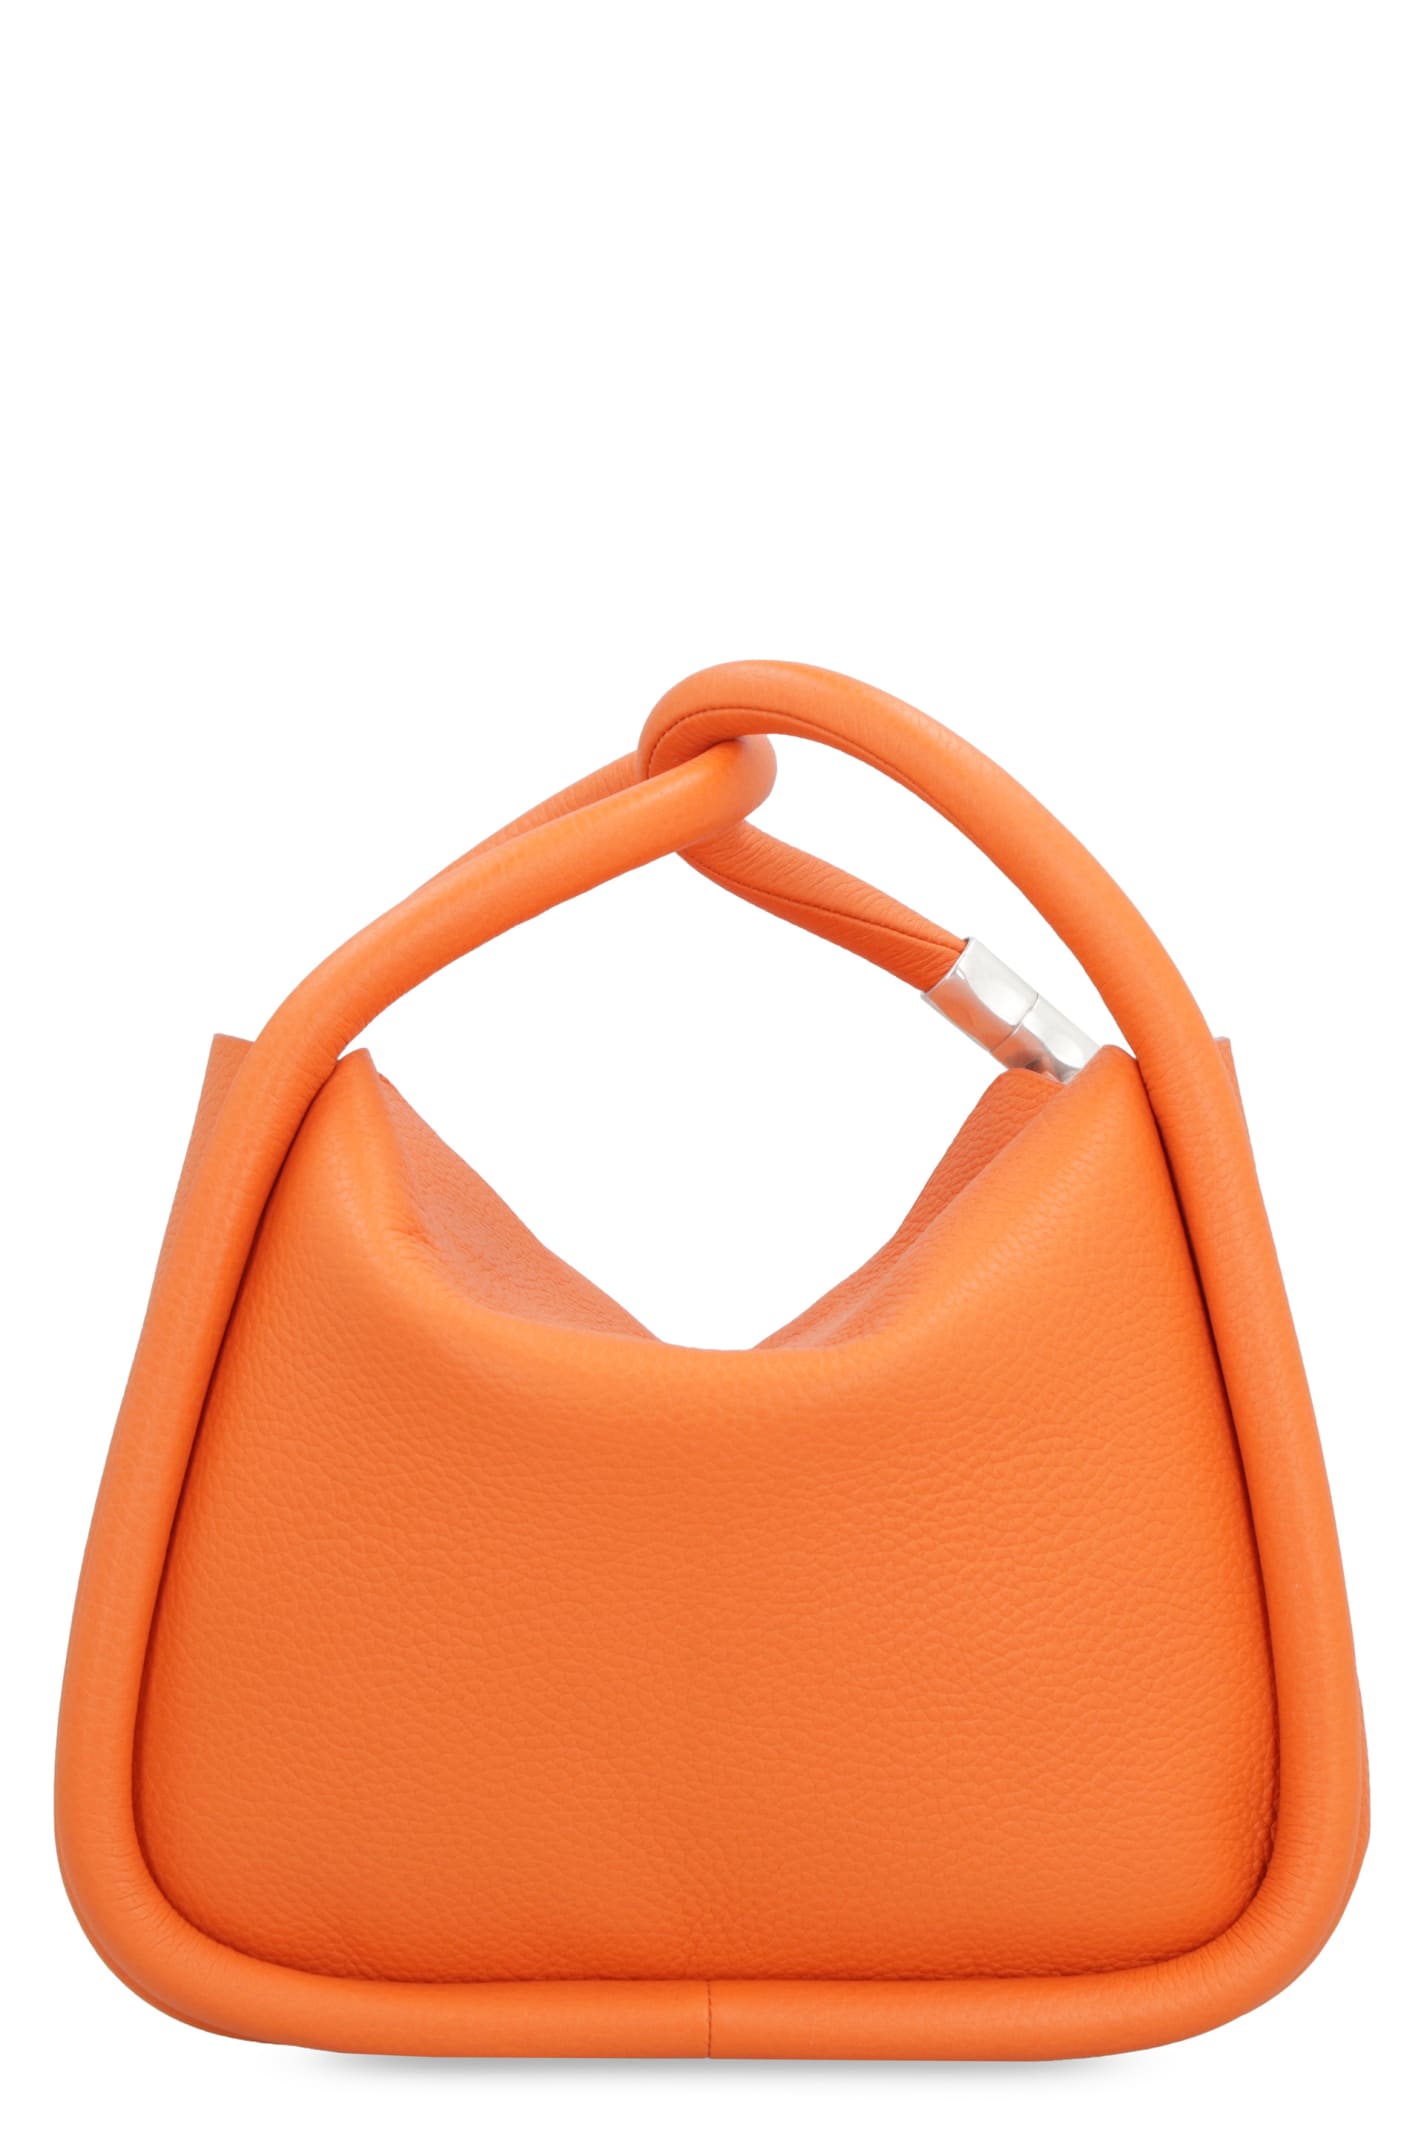 Boyy Wonton 25 Pebble Leather Bag In Orange